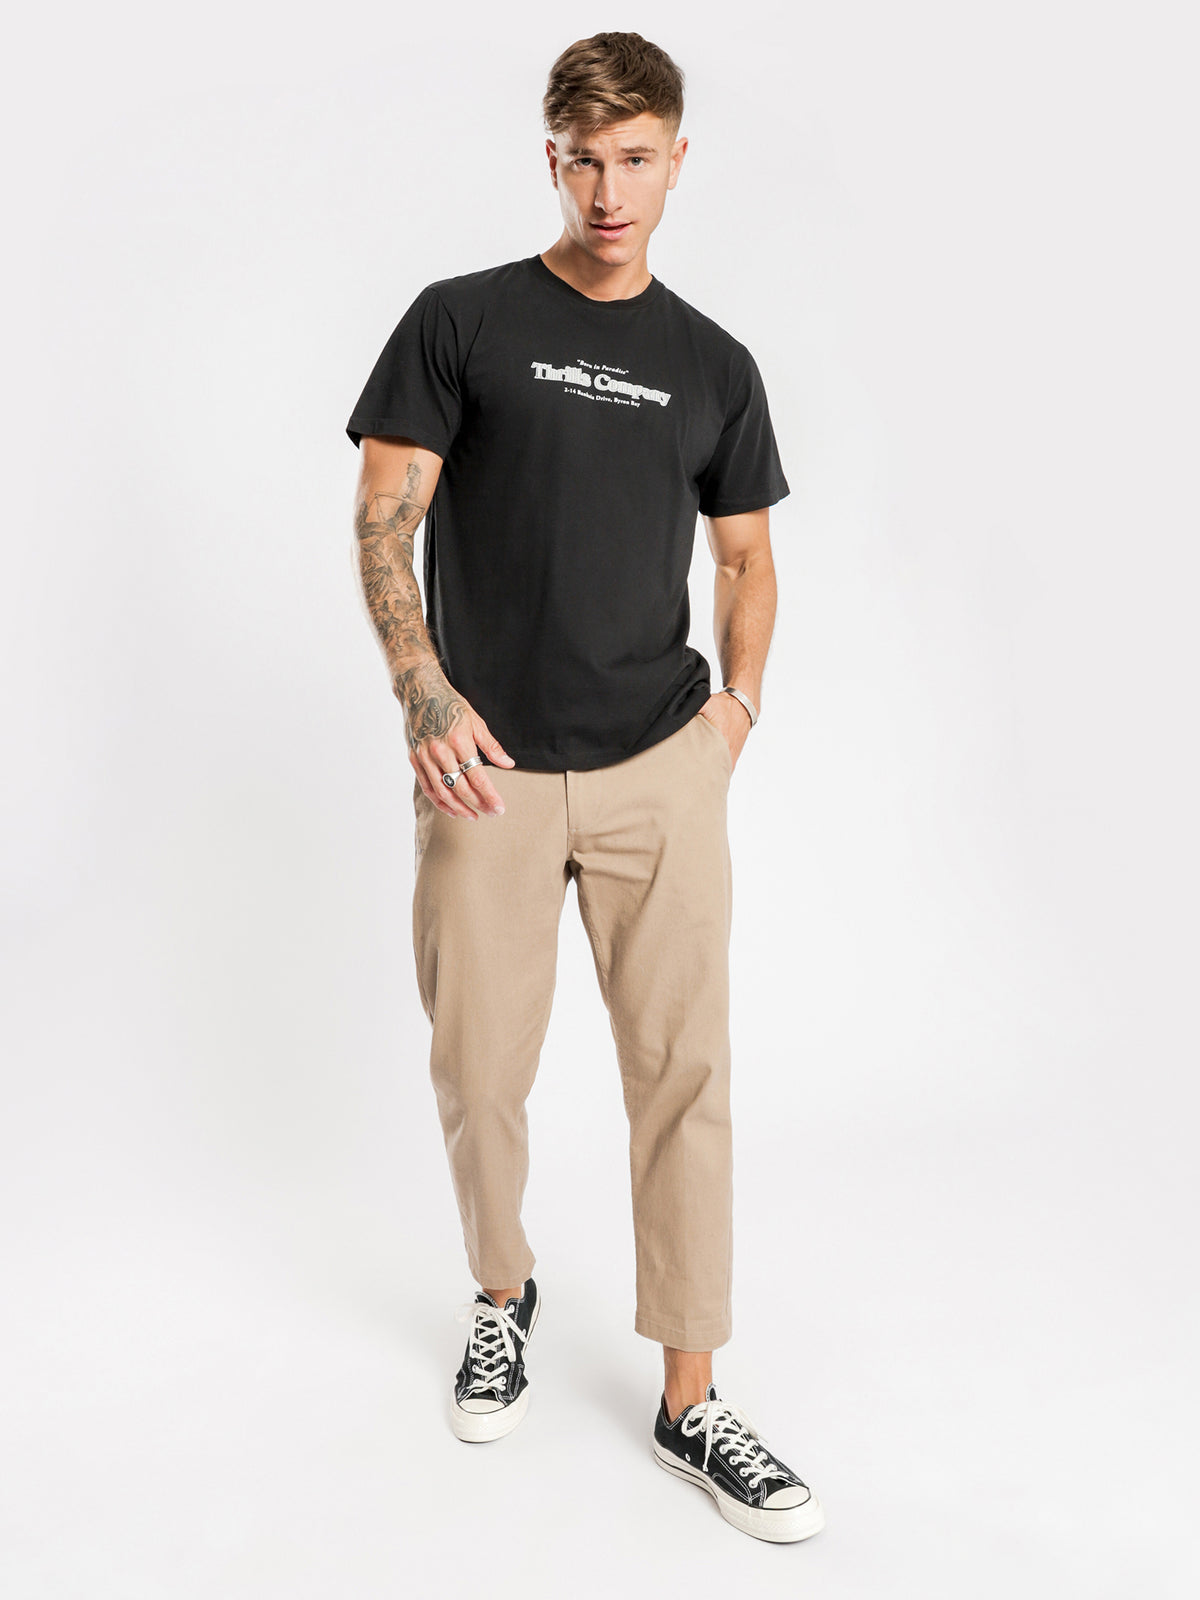 Company Pinline T-Shirt in Black